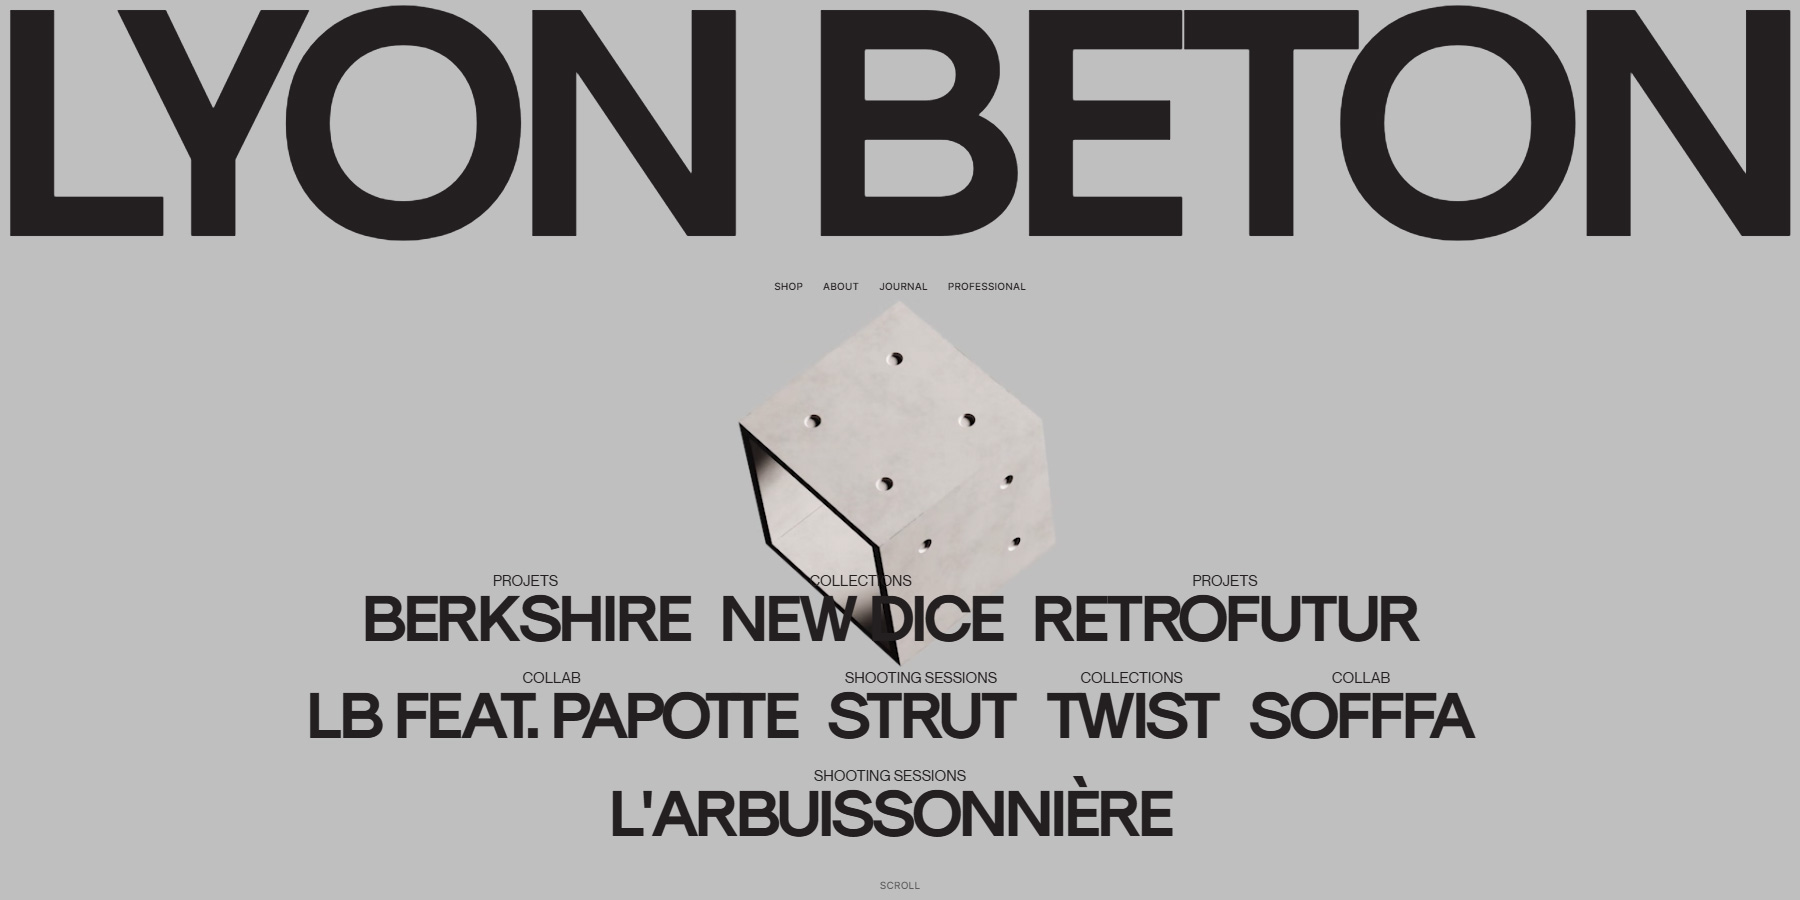 Lyon Béton - Website of the Day